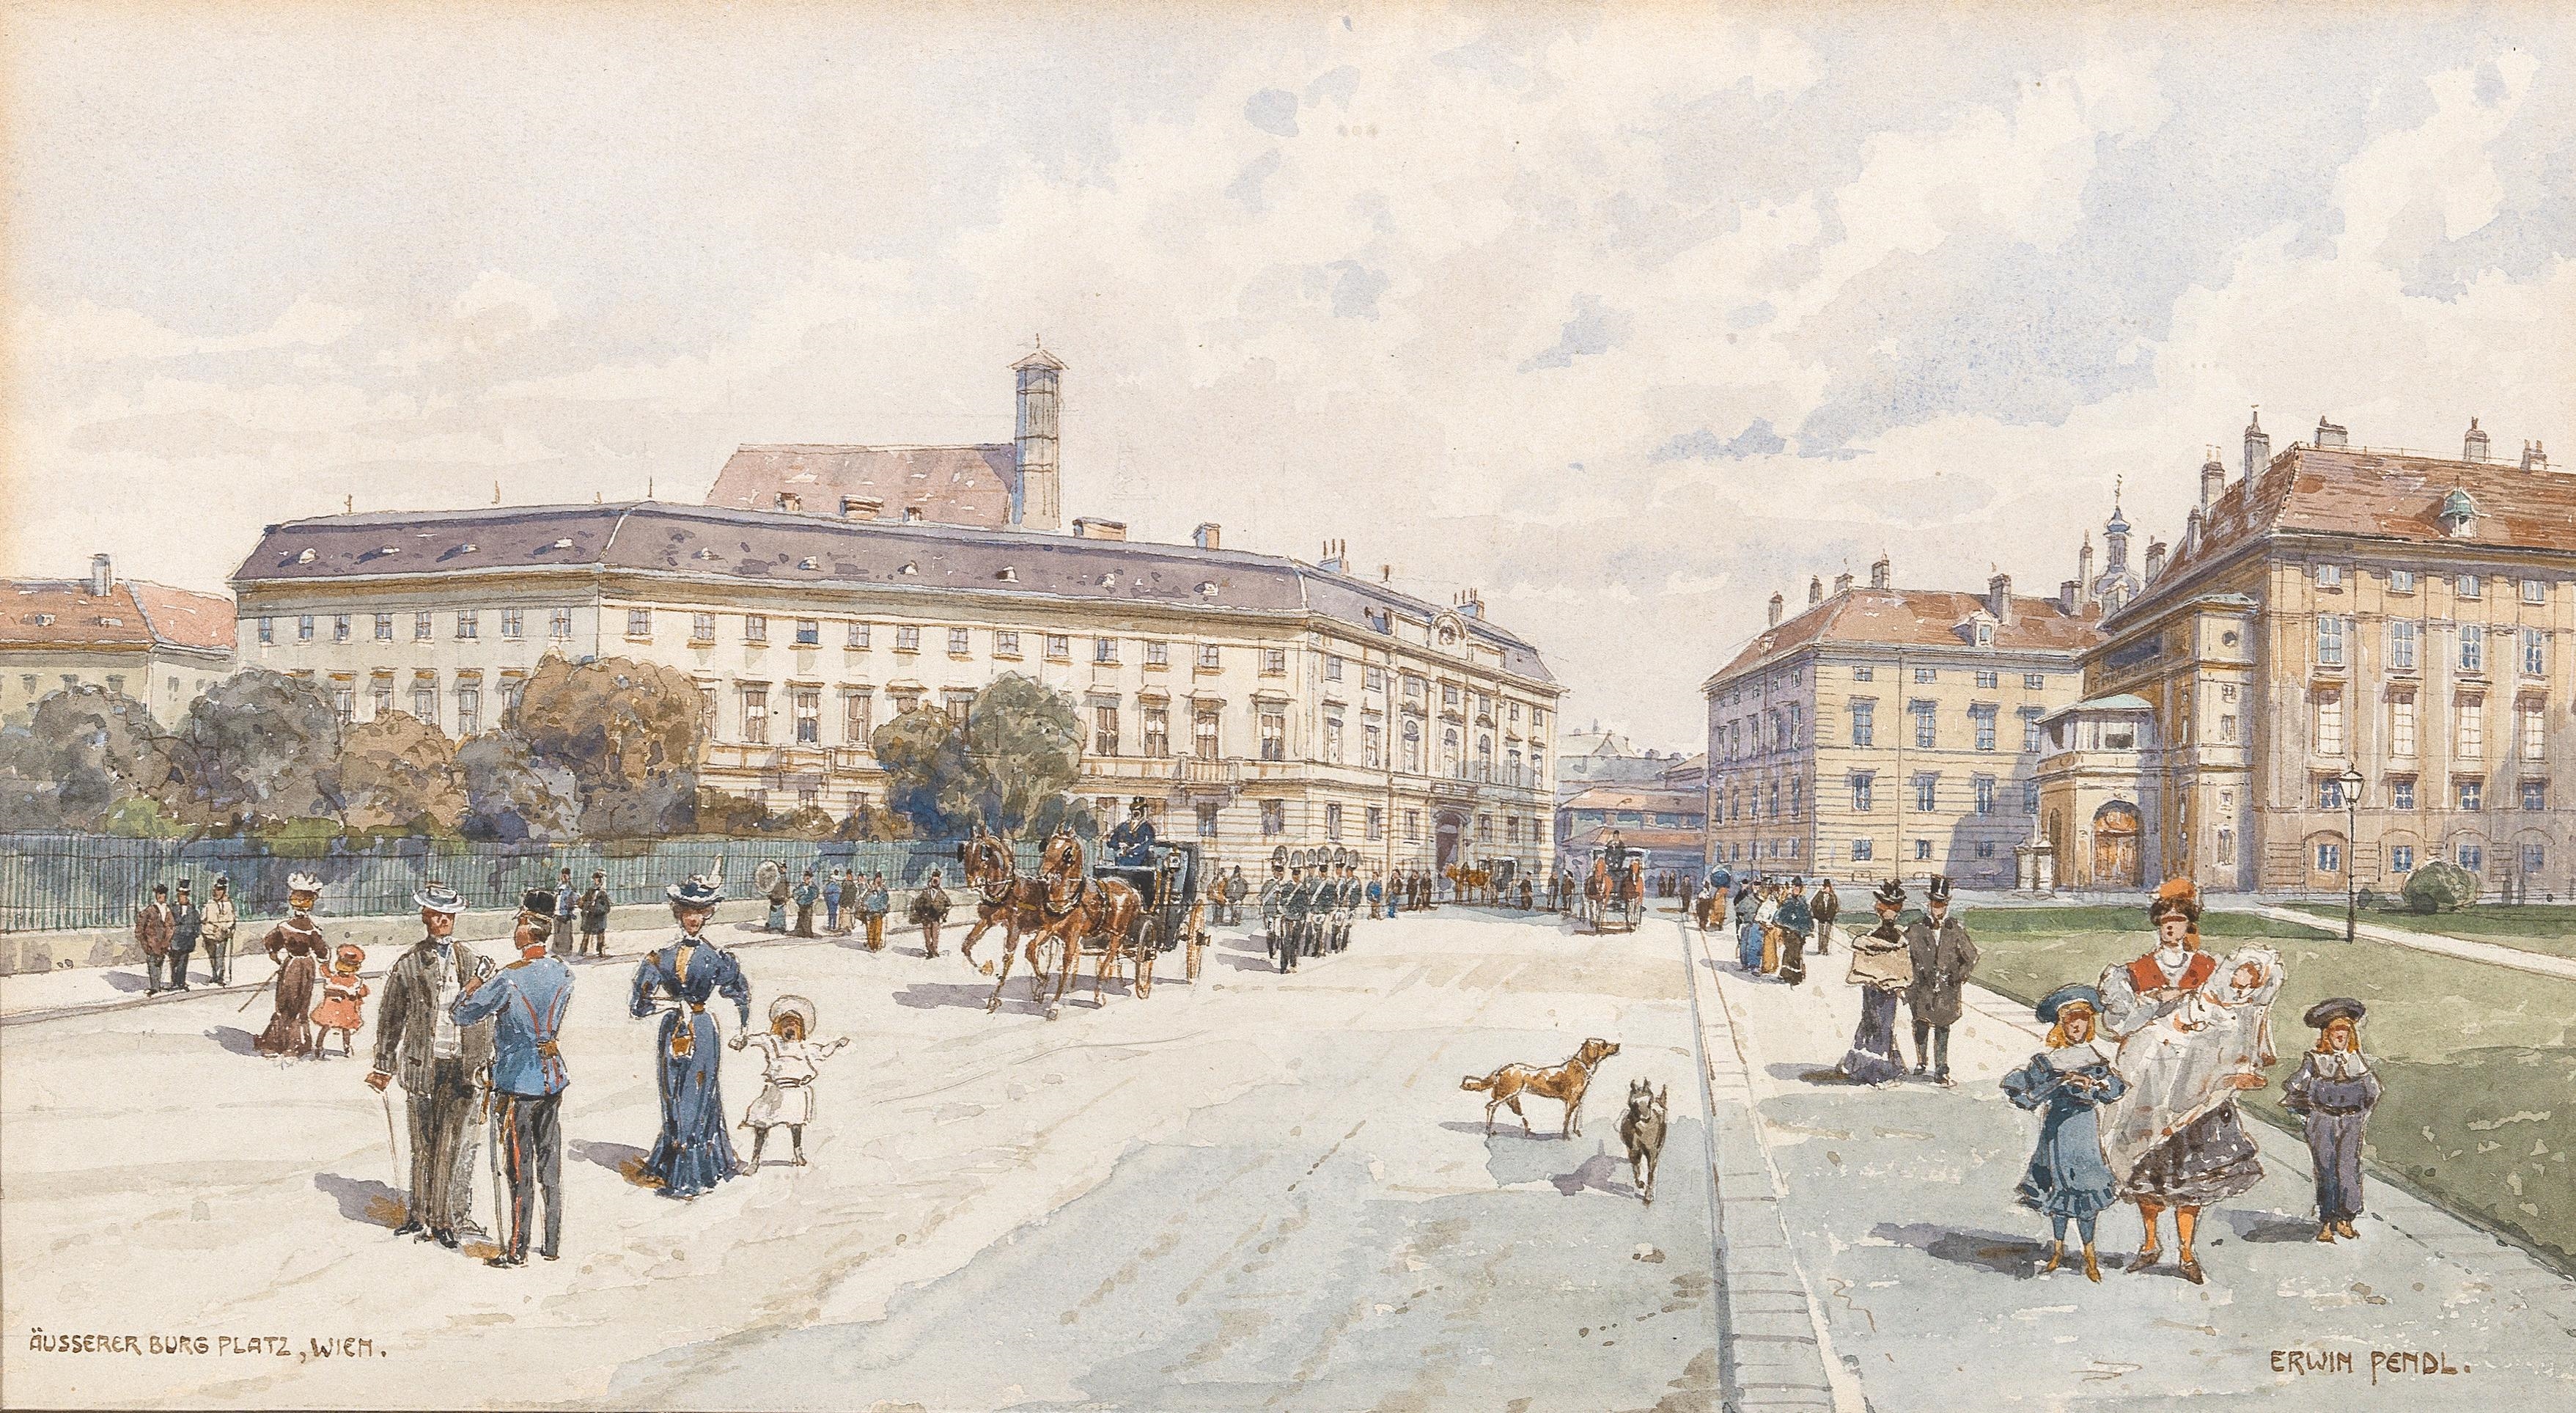 Artwork by Erwin Pendl, "Äusserer Burgplatz", Made of watercolor on paper